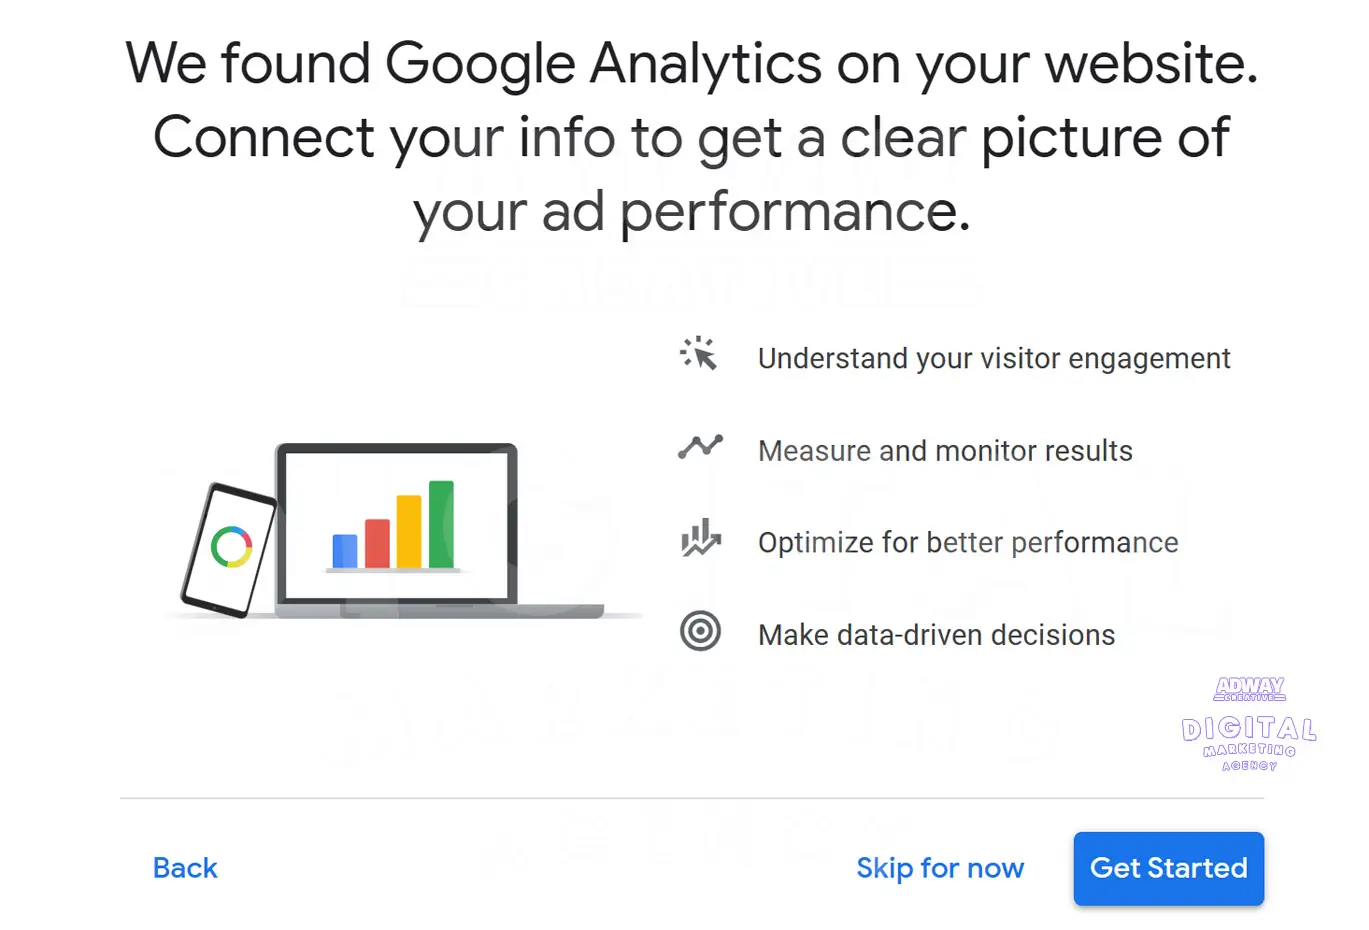 6-Consider setting up Google Analytics for better tracking